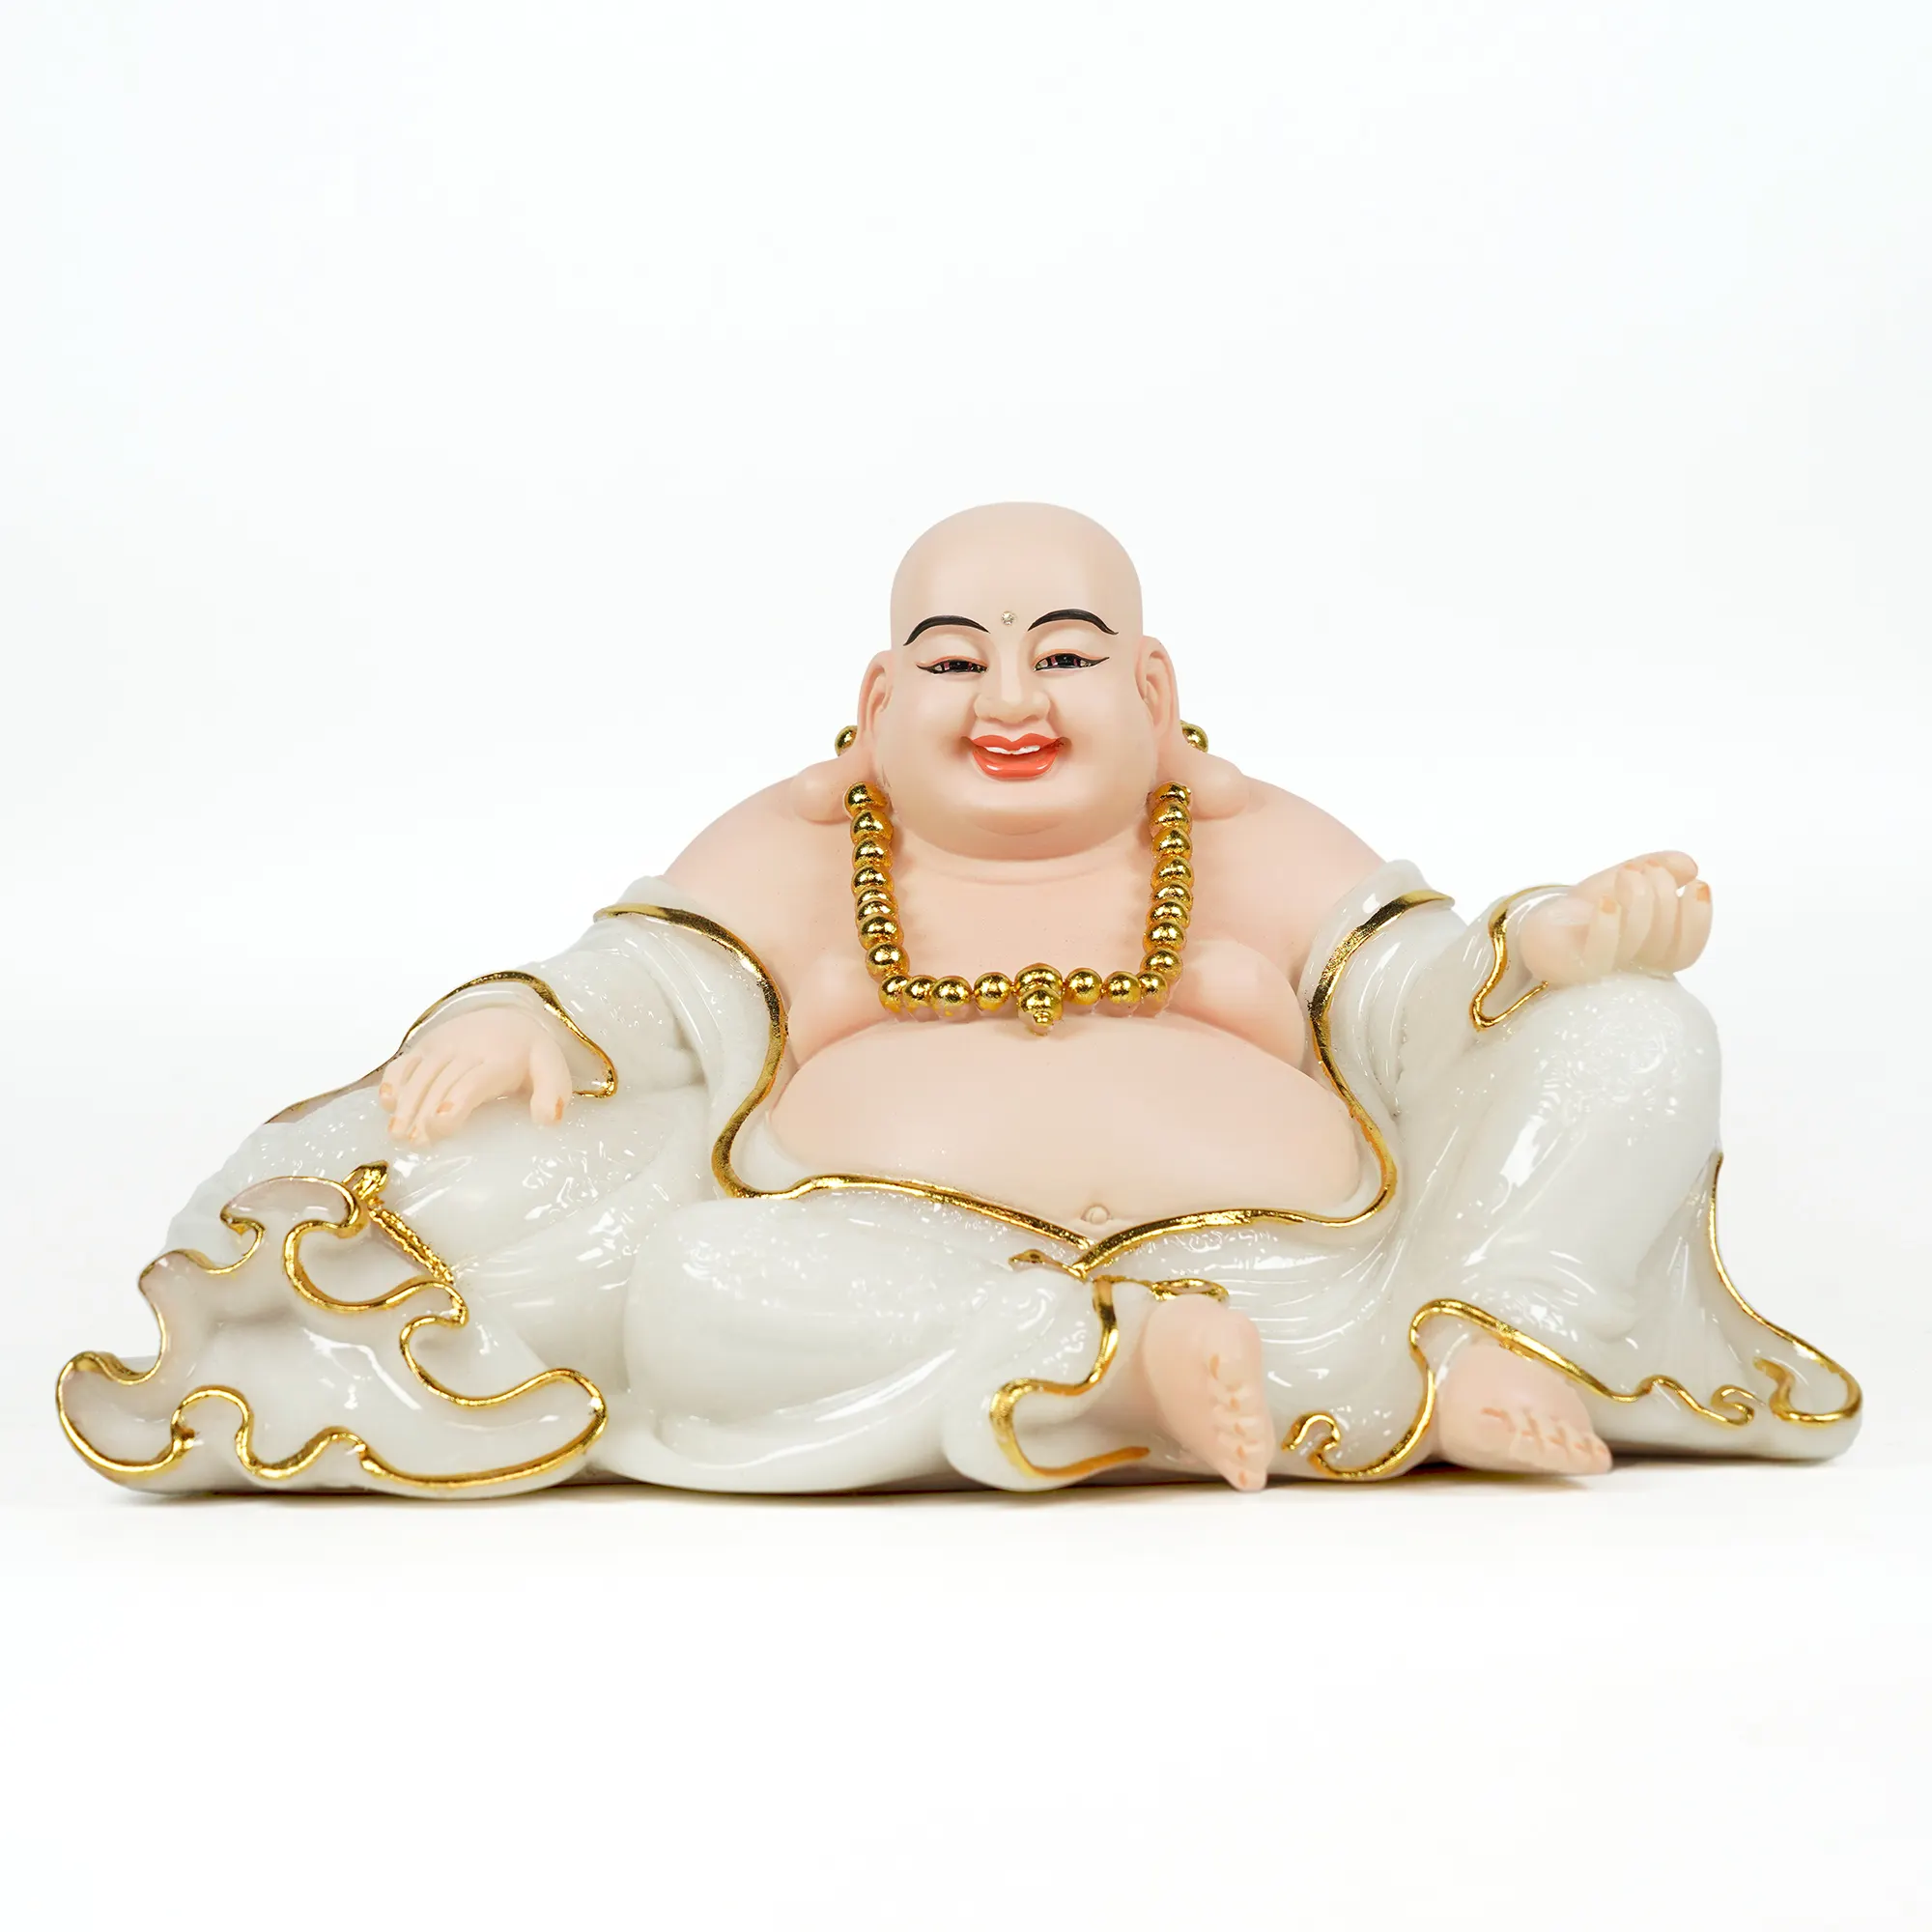 Hadiah dan kerajinan Resin kerajinan Buddha Resin patung putih patung menyesuaikan desain dan warna untuk dekorasi rumah